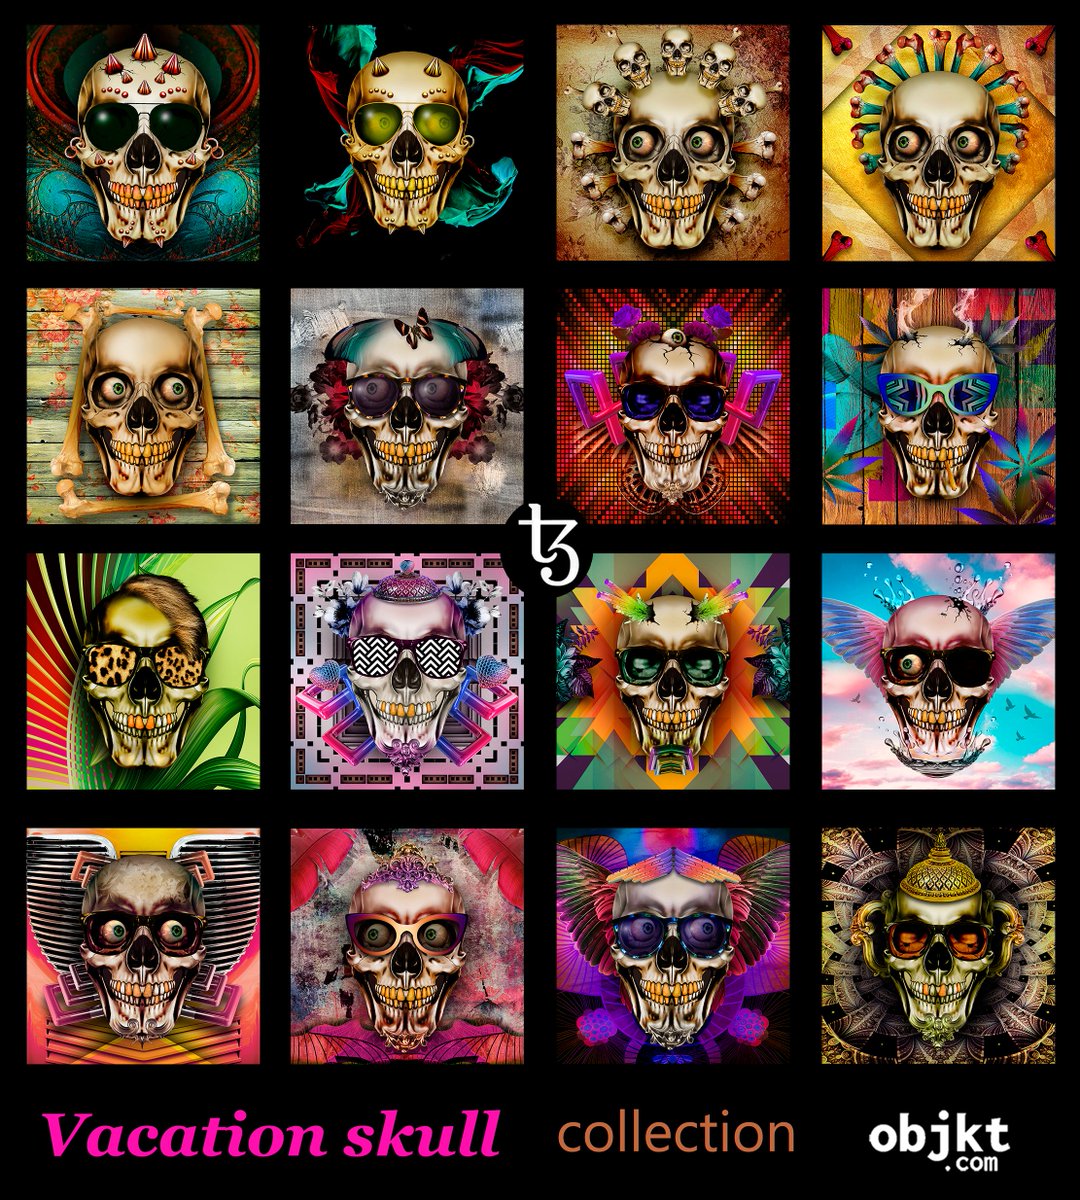 My collection - Vacation Skull - at Objikt objkt.com/users/tz2UXuWv……………… @xtz @tezos @Objikt @brasiltezos @23ArtCollective